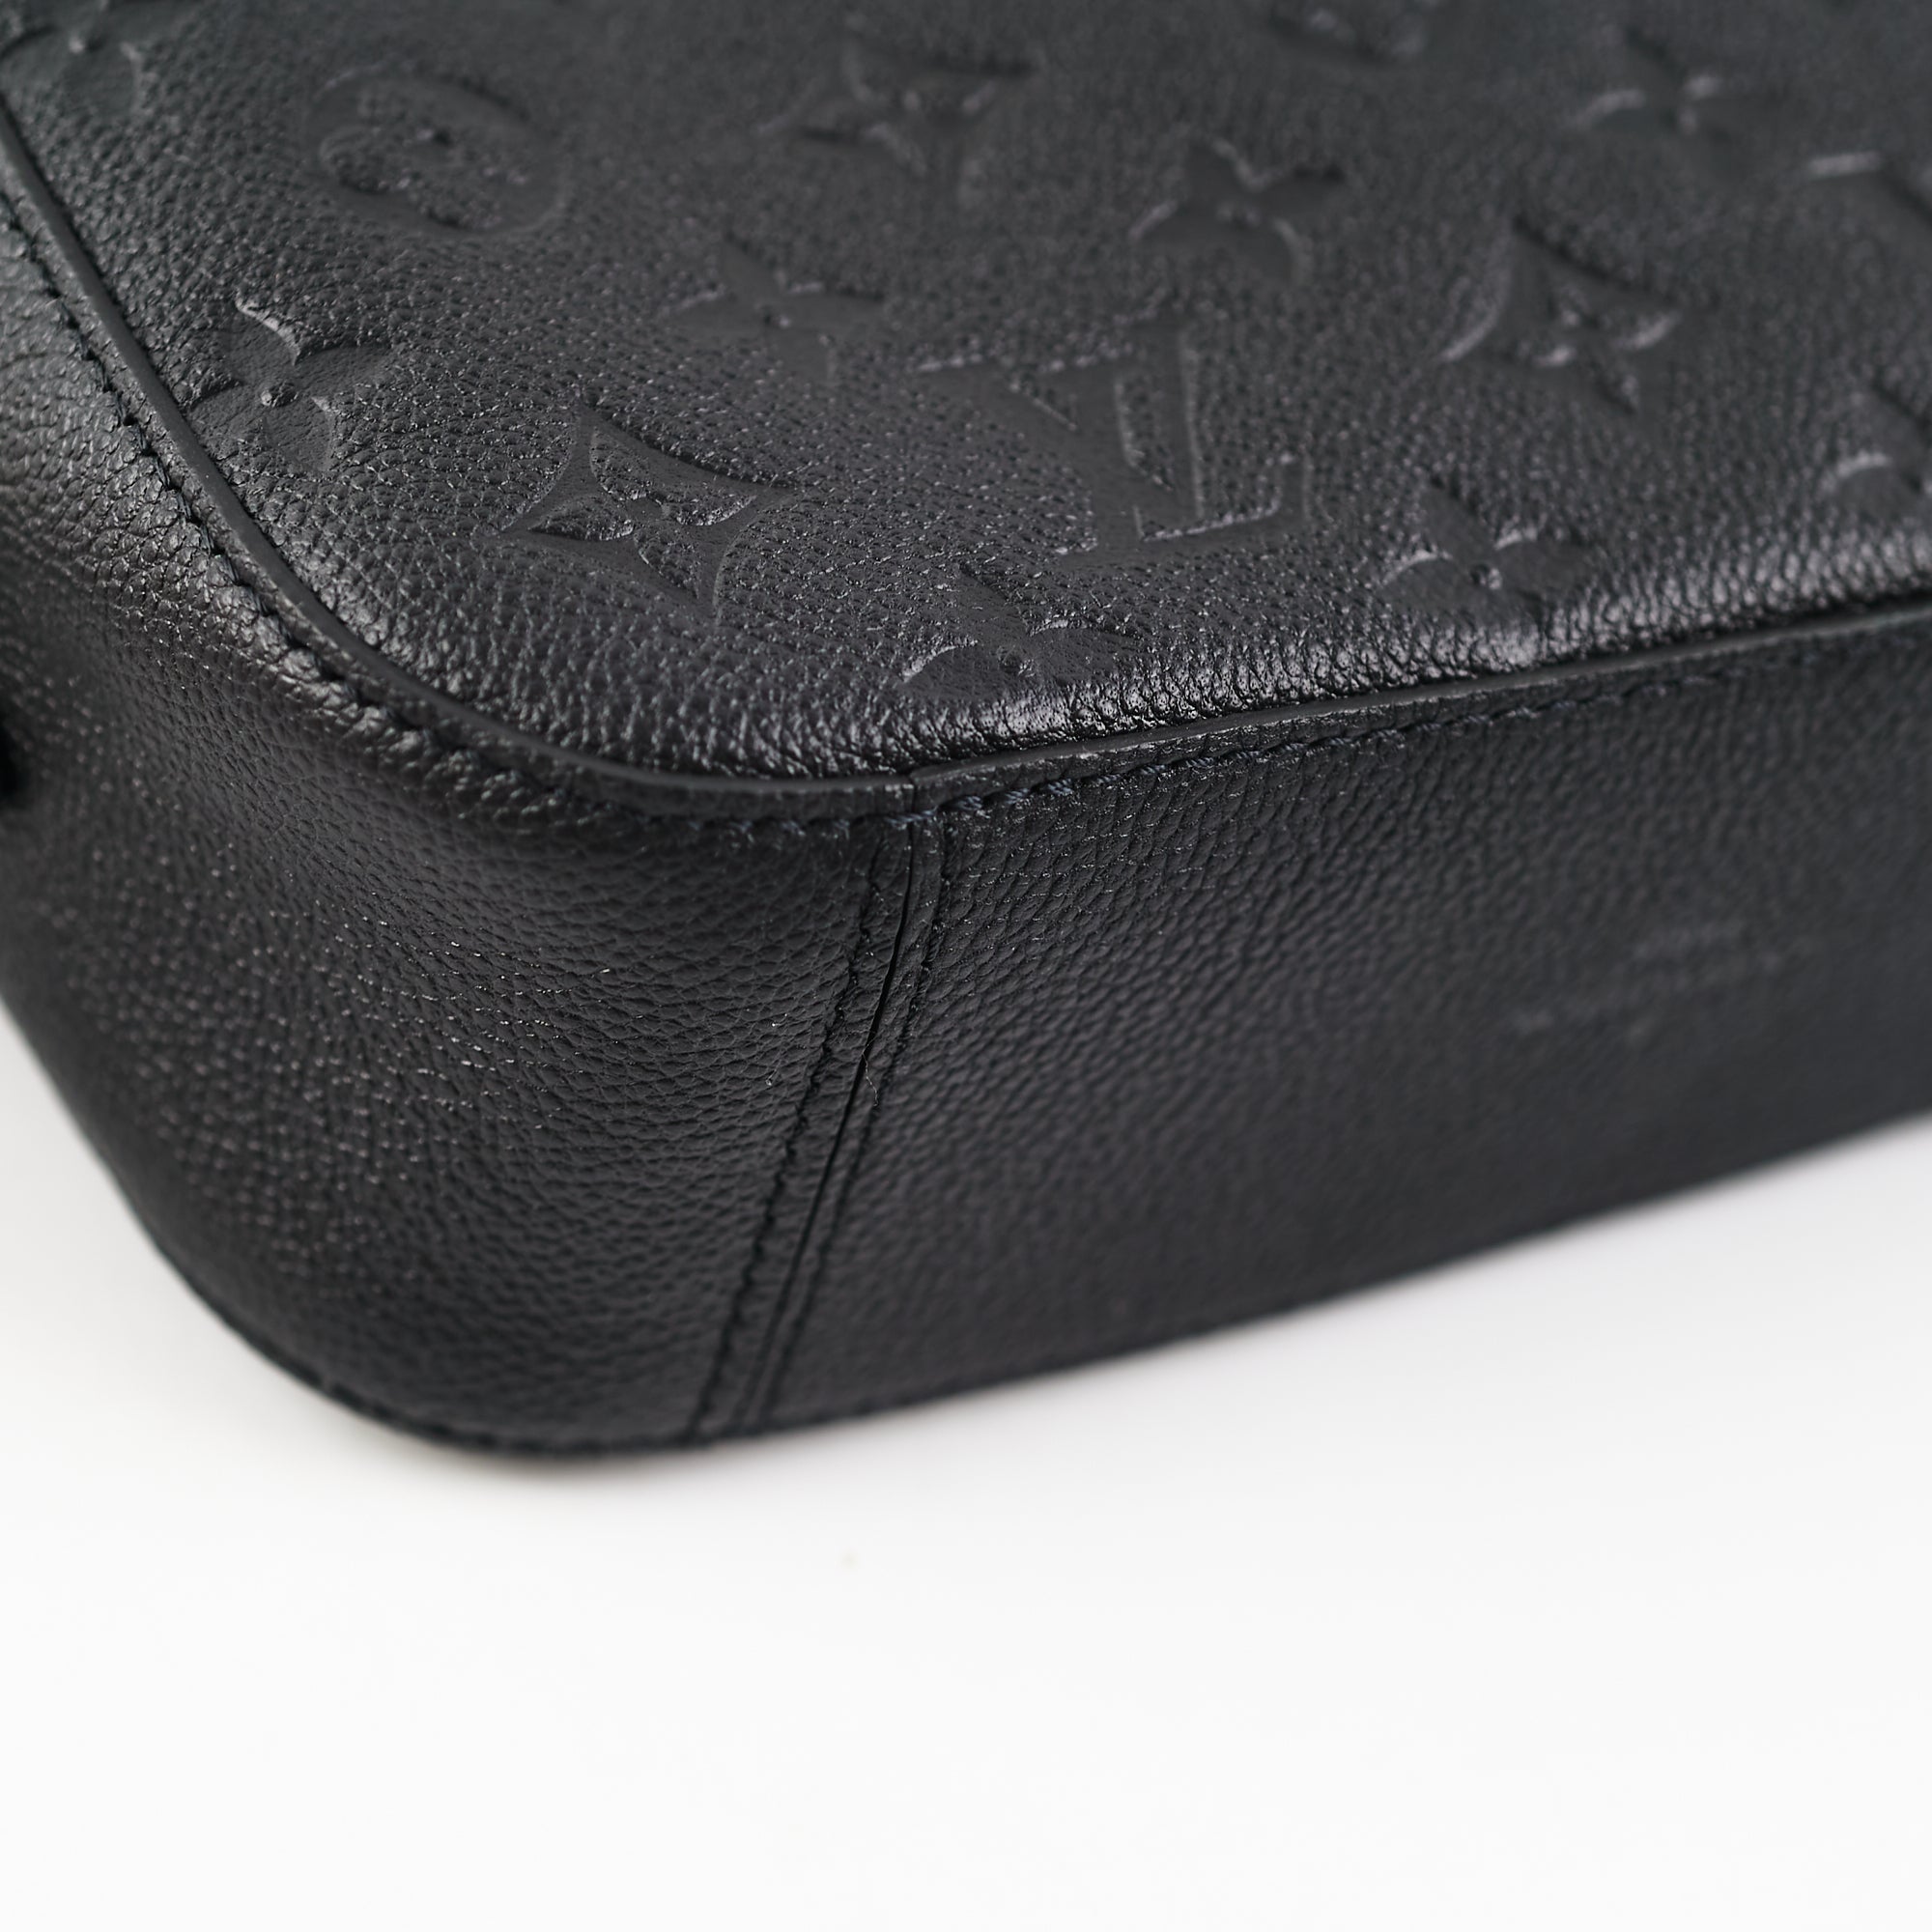 Louis Vuitton Saintonge, Canvas/Leather, Mono/Black GHW - Laulay